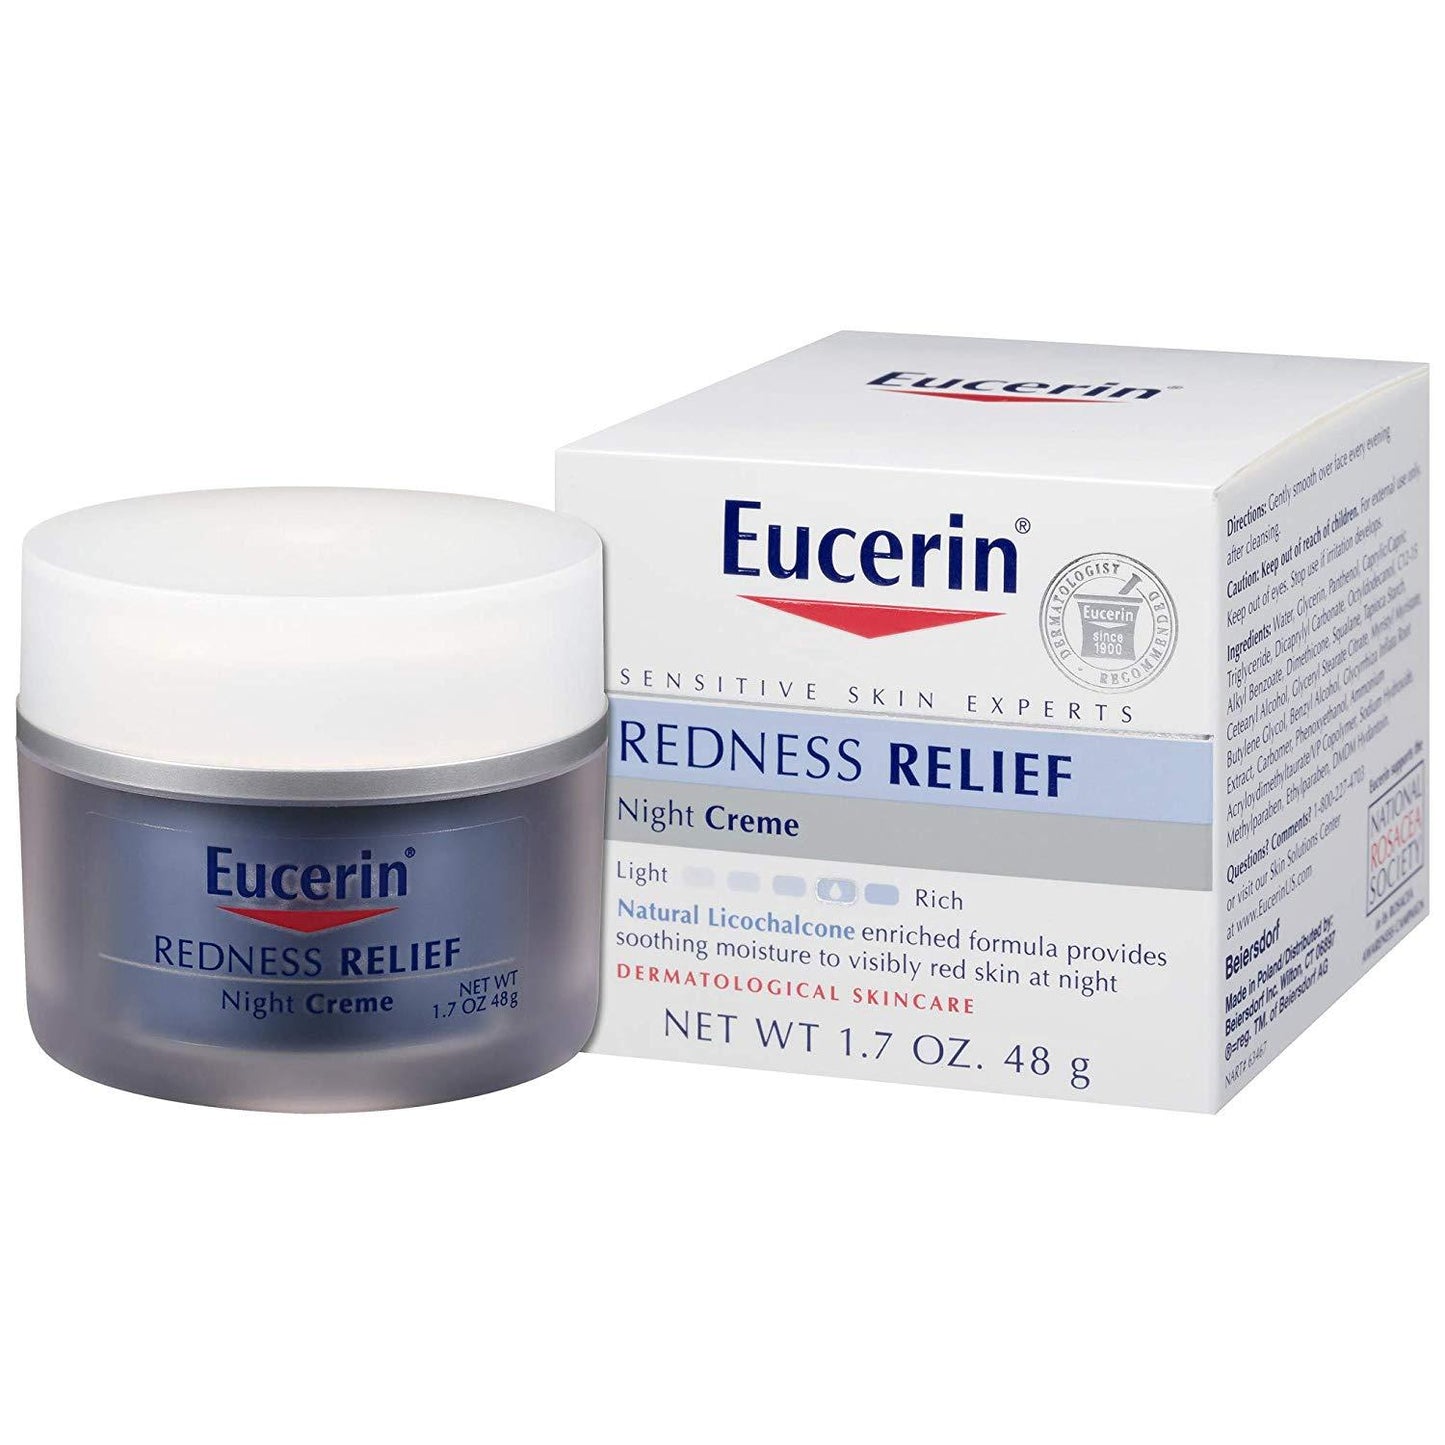 Eucerin Redness Relief Night Creme 1.7 oz (48g)